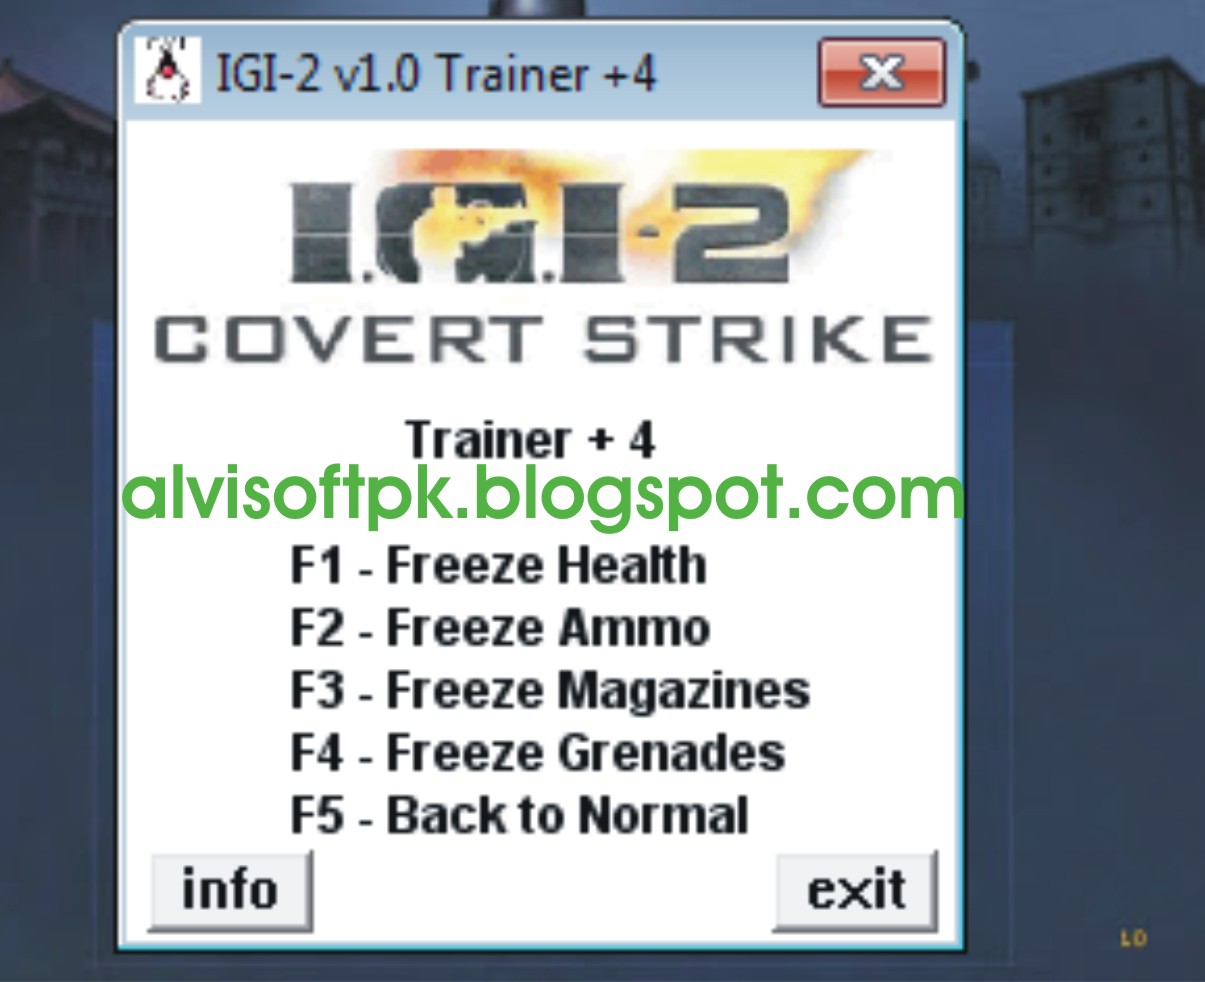 Igi 2 trainer download for pc windows 7